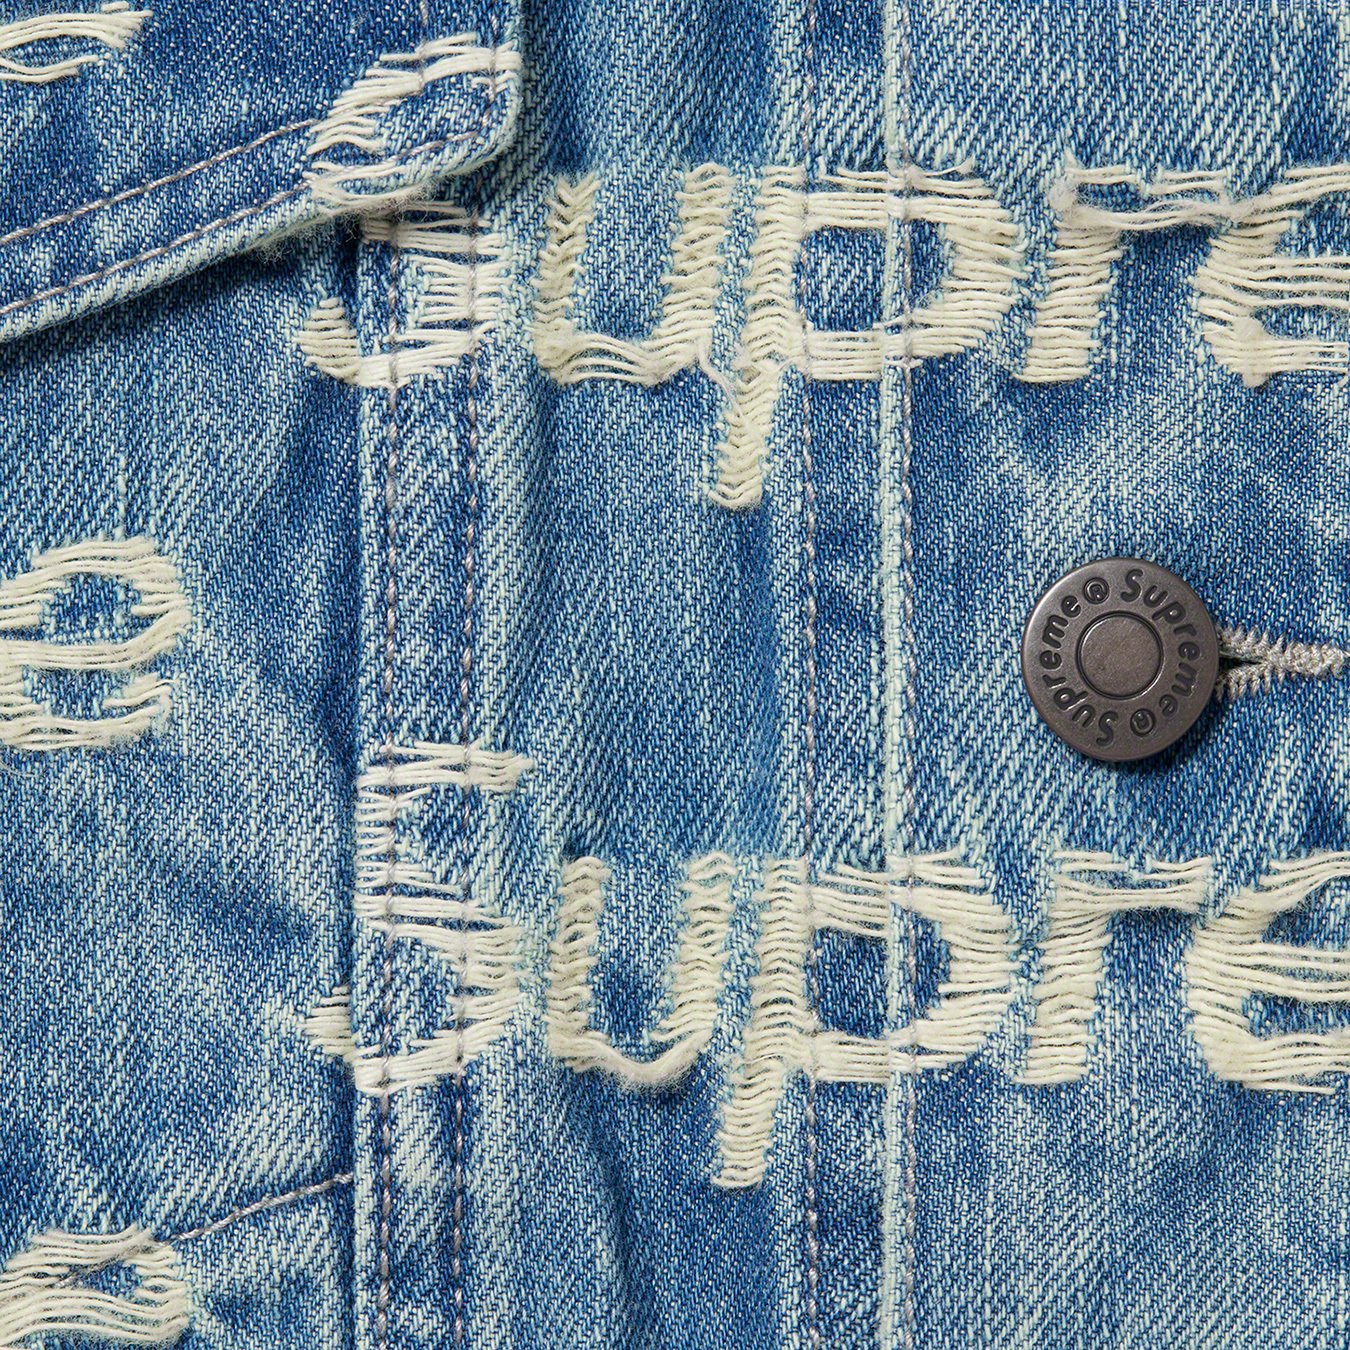 Supreme Frayed Logos Denim Jacket - Farfetch